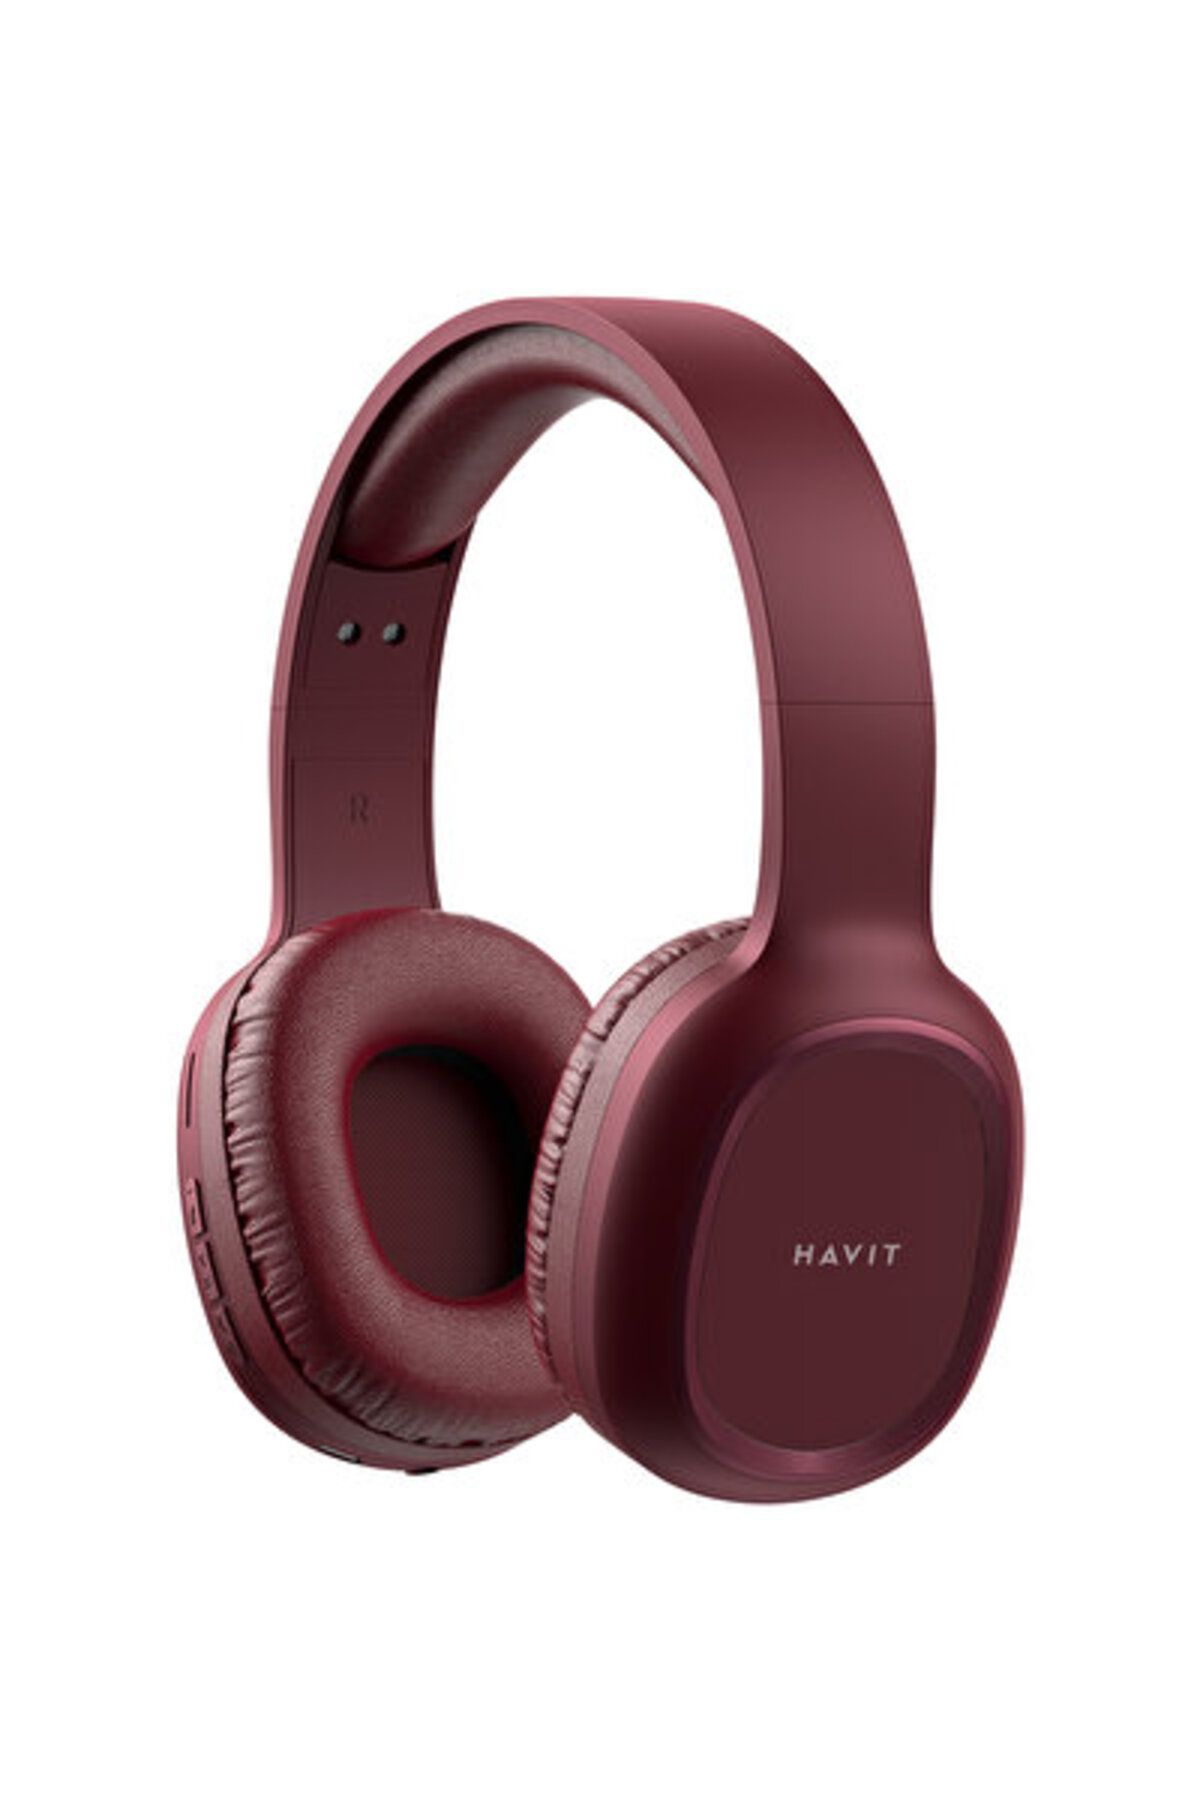 Havit H2590bt Pro Bordo Bluetooth Kulaklık